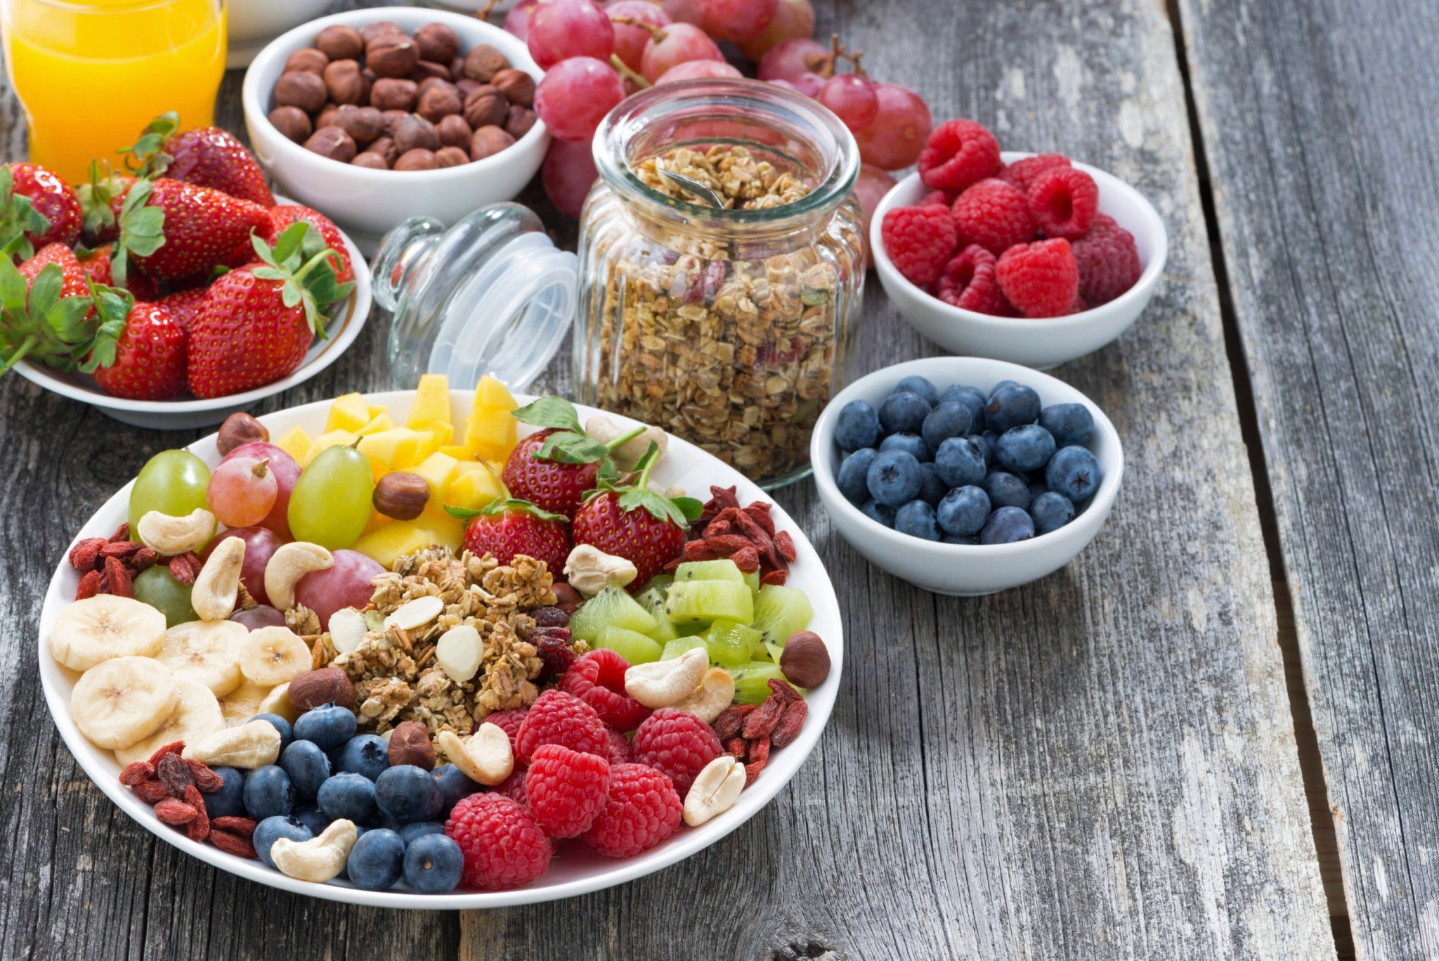 ingredients for a healthy breakfast - berries, fruit, muesli and||Breakfast burritos and coffee